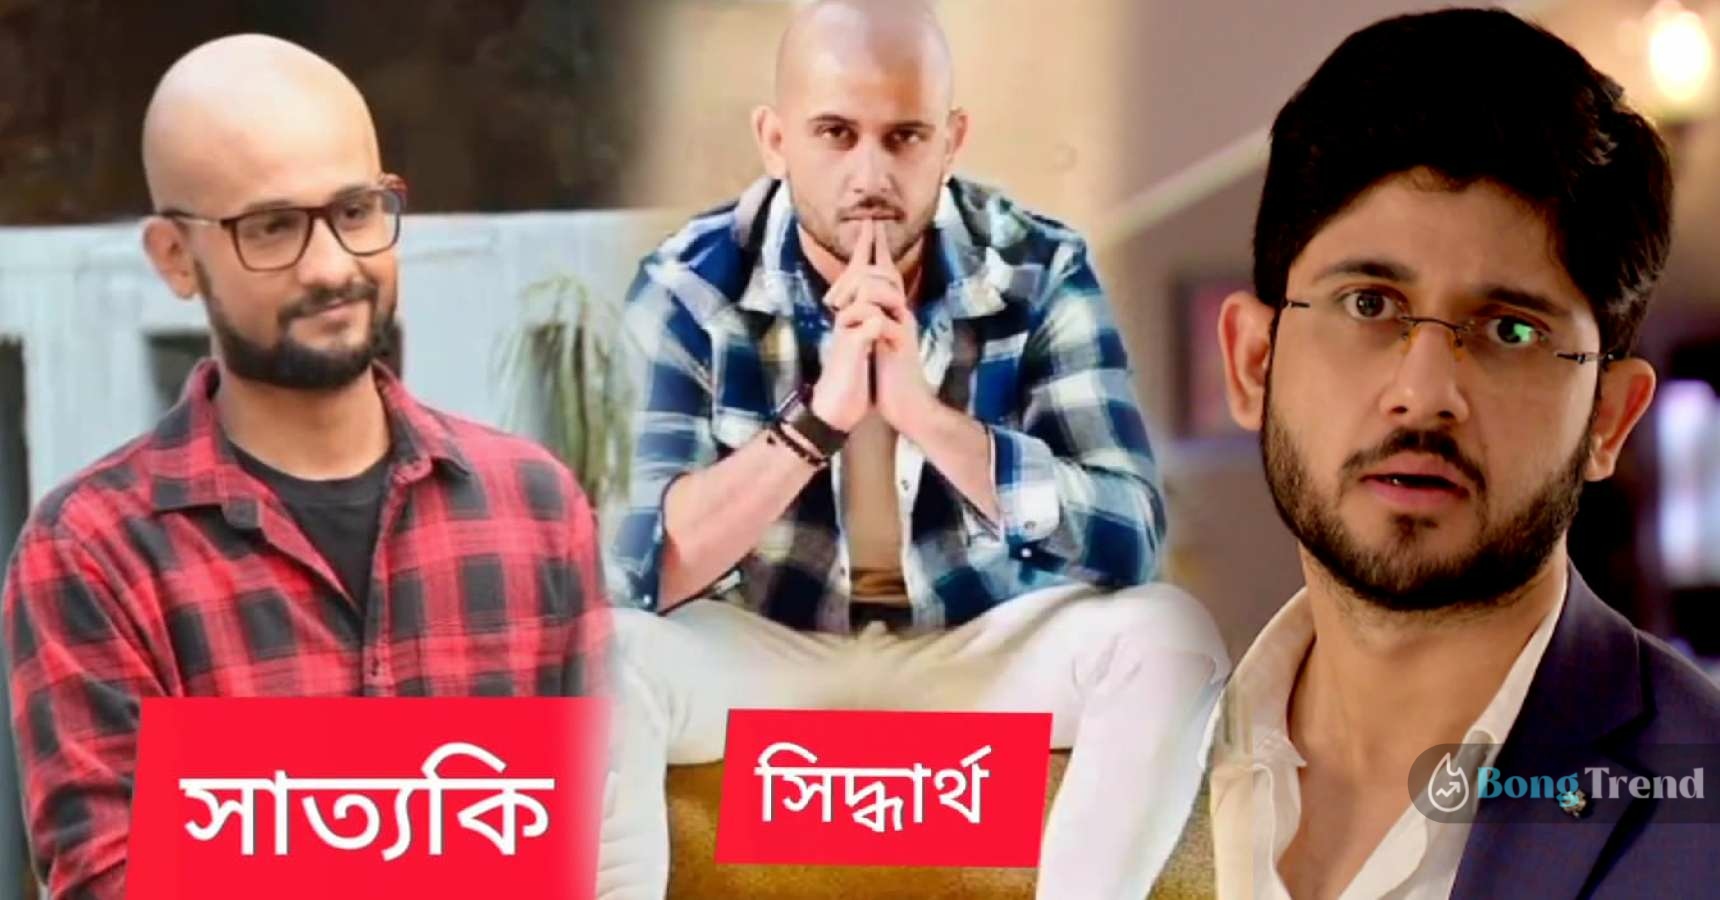 Bengali Mega Serial Actors Fan made Bald look photos viral on social media